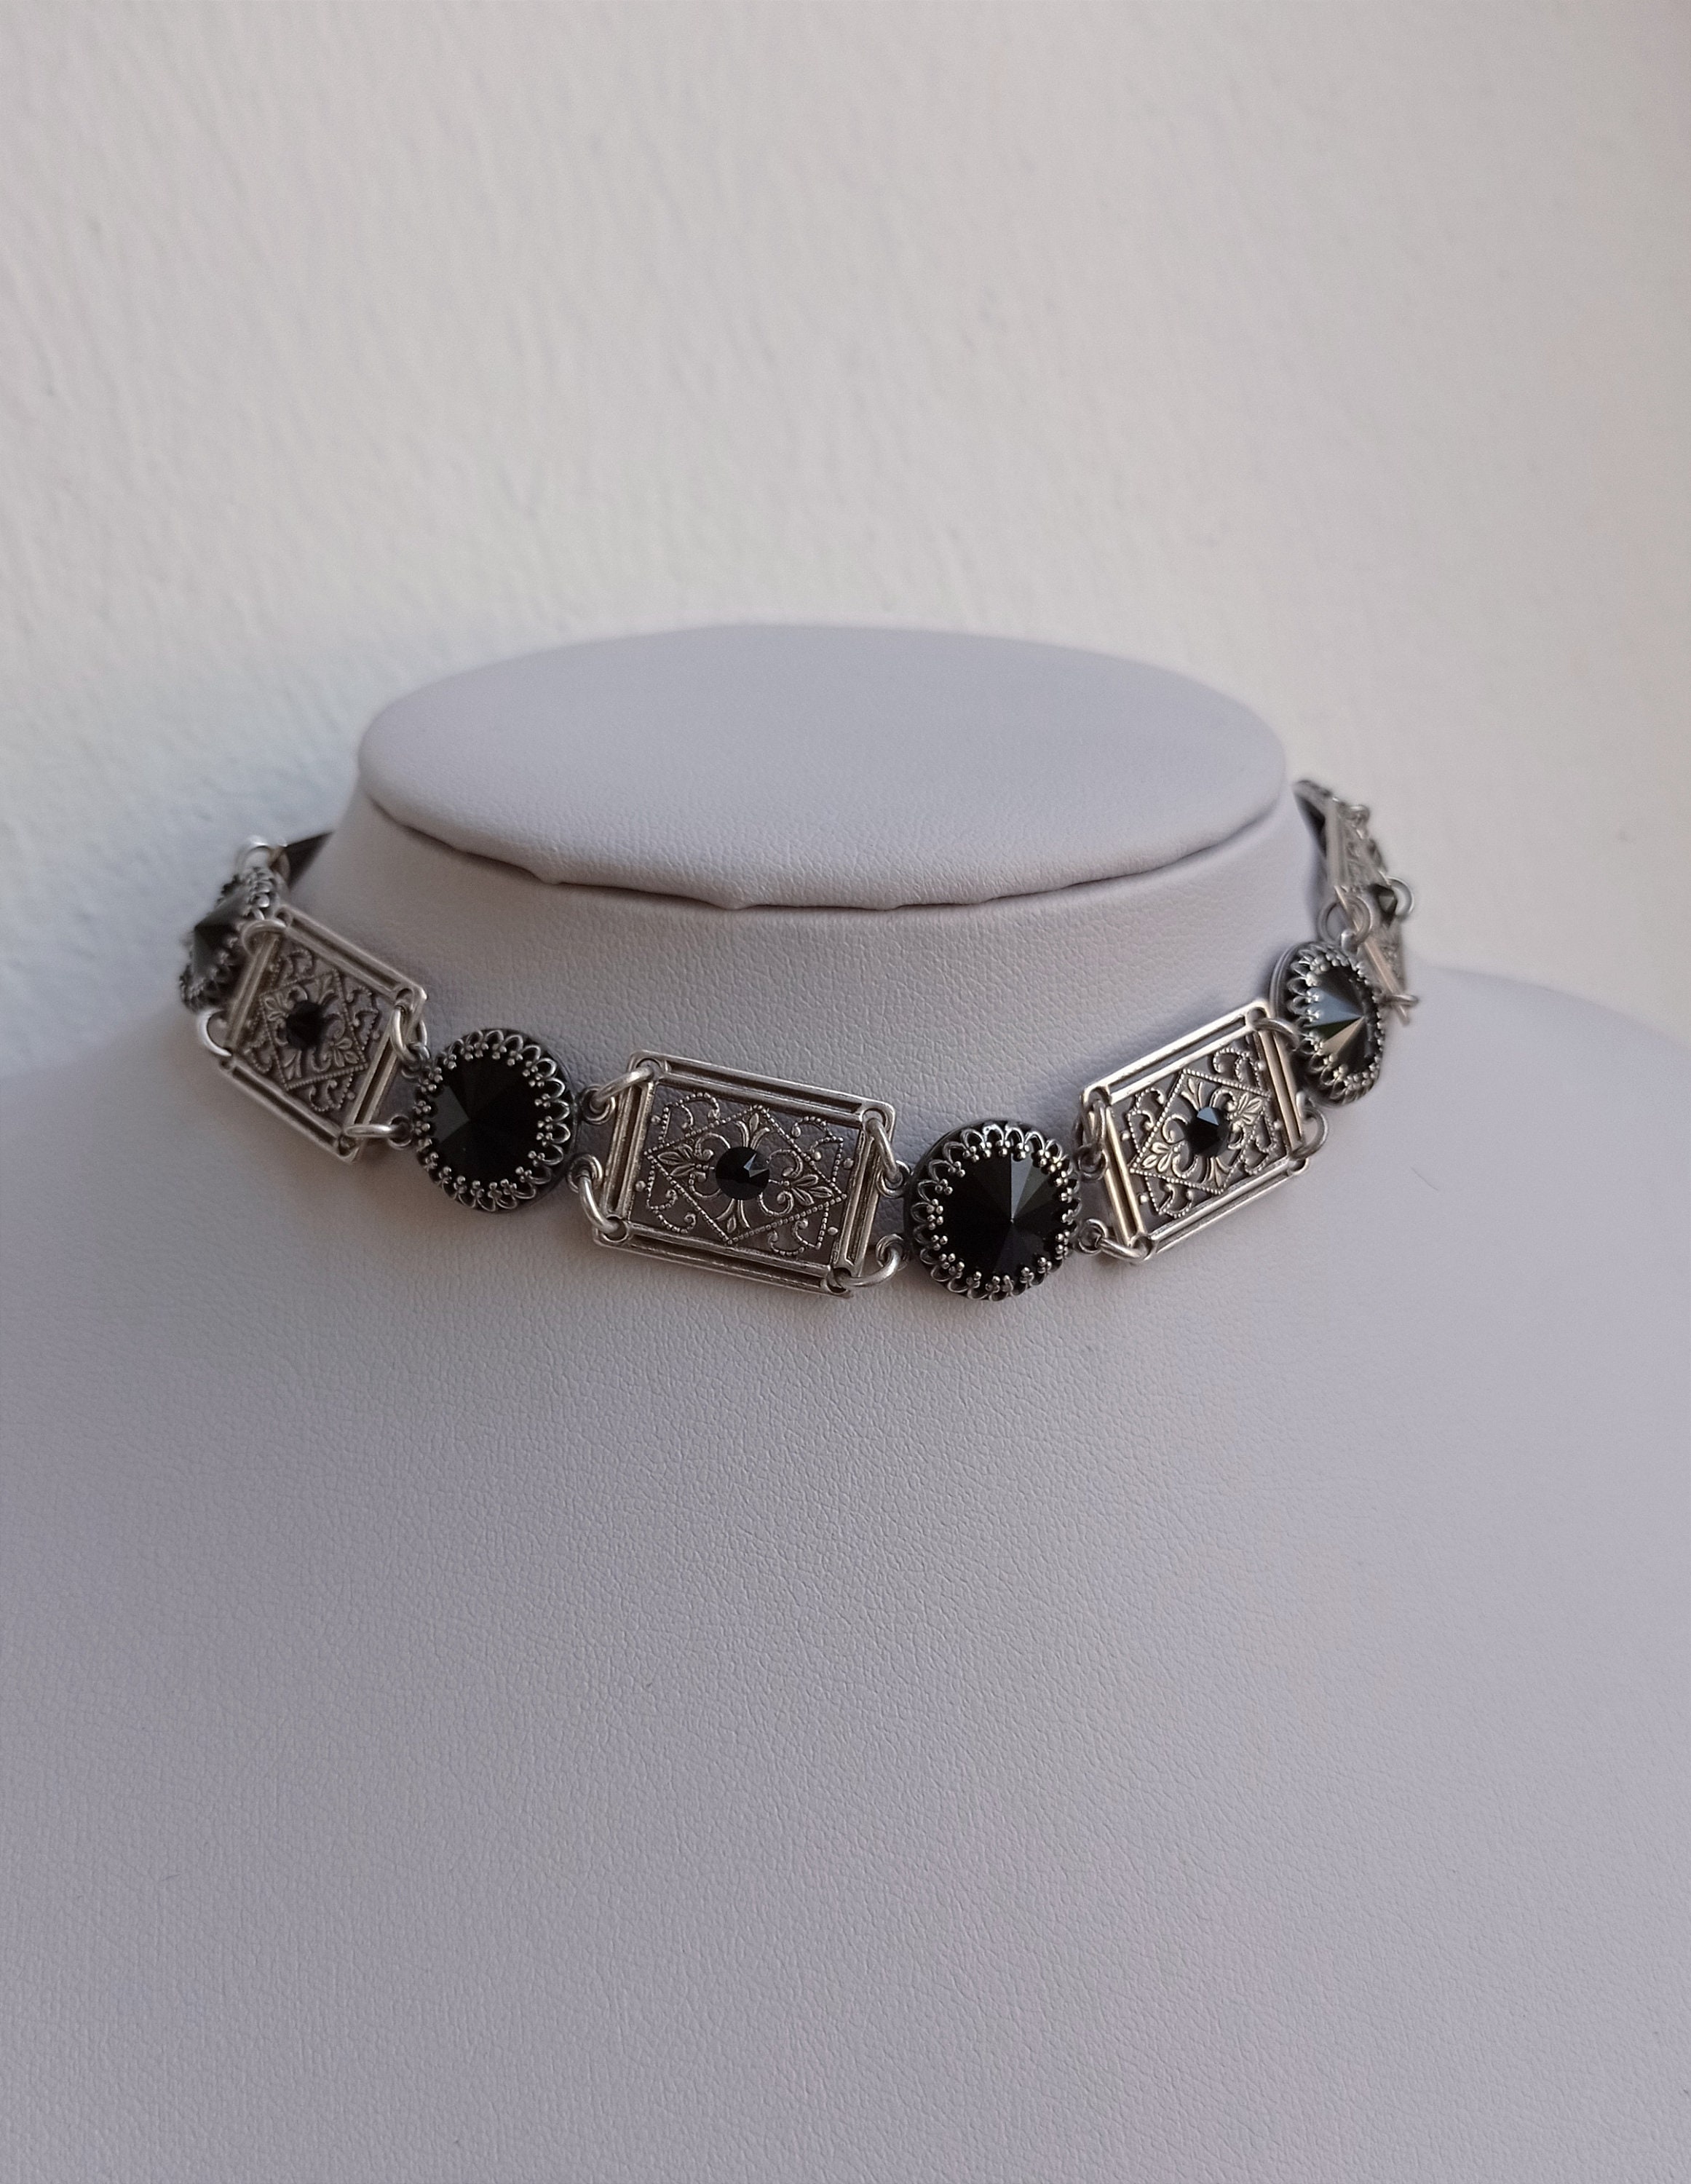 Grand Gothic Choker Silver Black Swarovski Choker – Aranwen's Jewelry